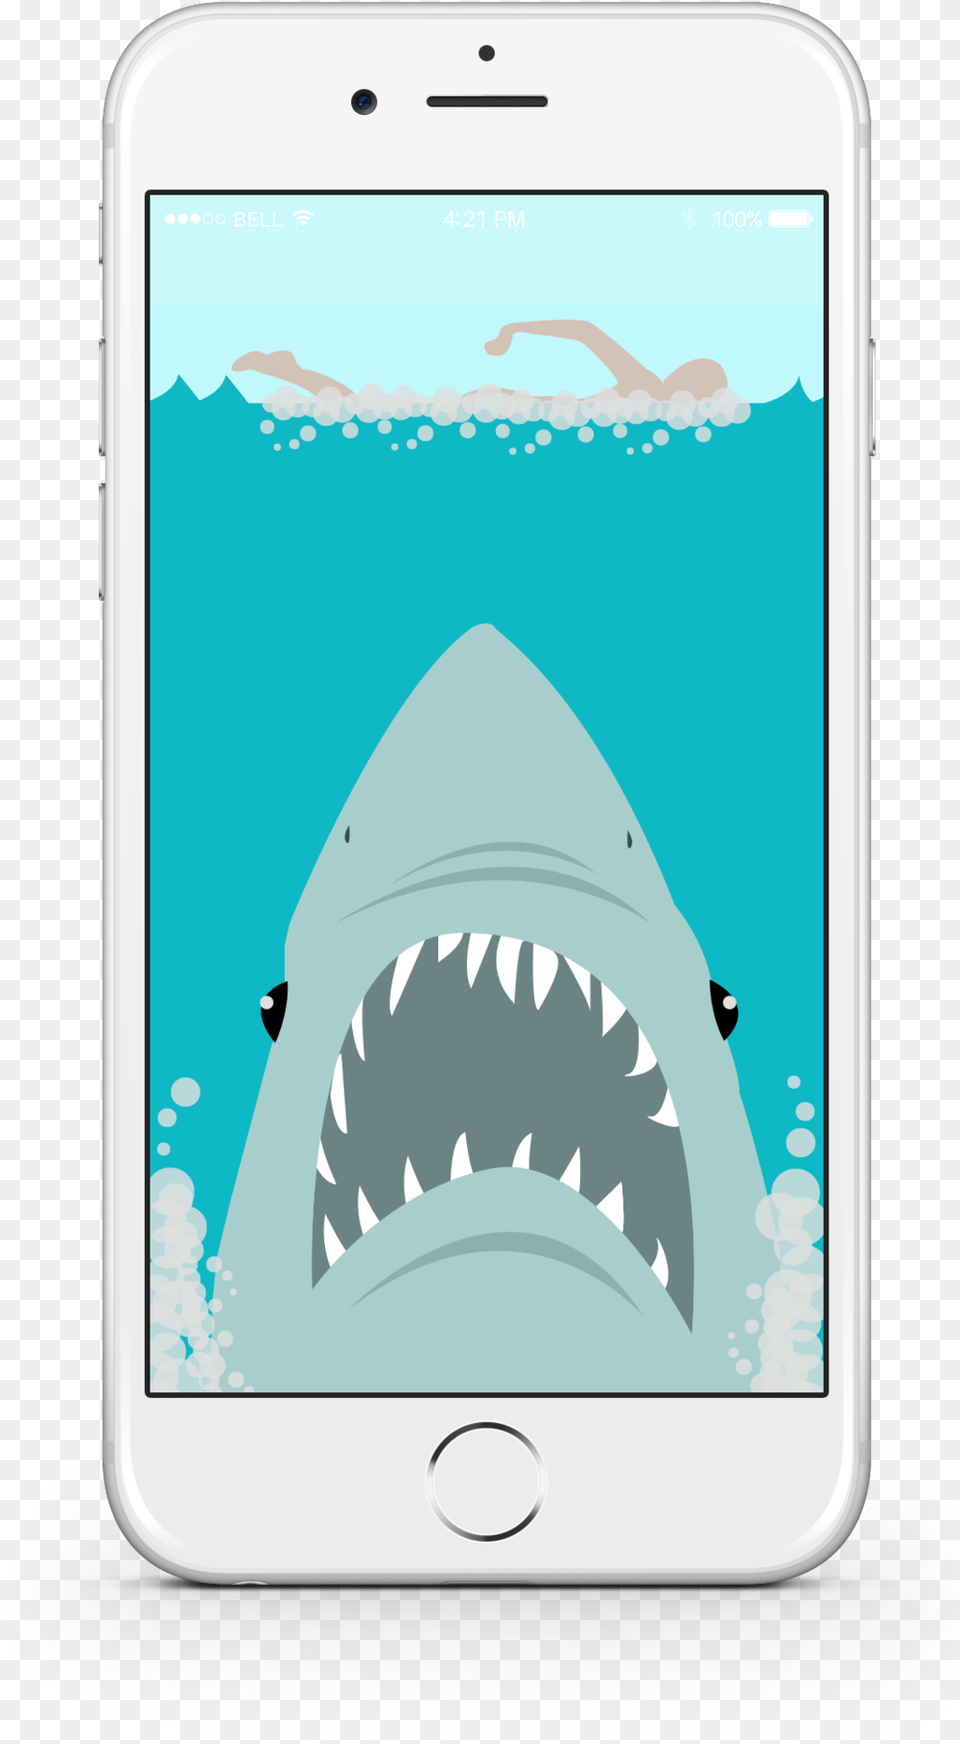 Shark Week Iphone Background Charlene Henry Cartoon Shark Wallpaper Iphone, Electronics, Mobile Phone, Phone, Animal Free Png Download